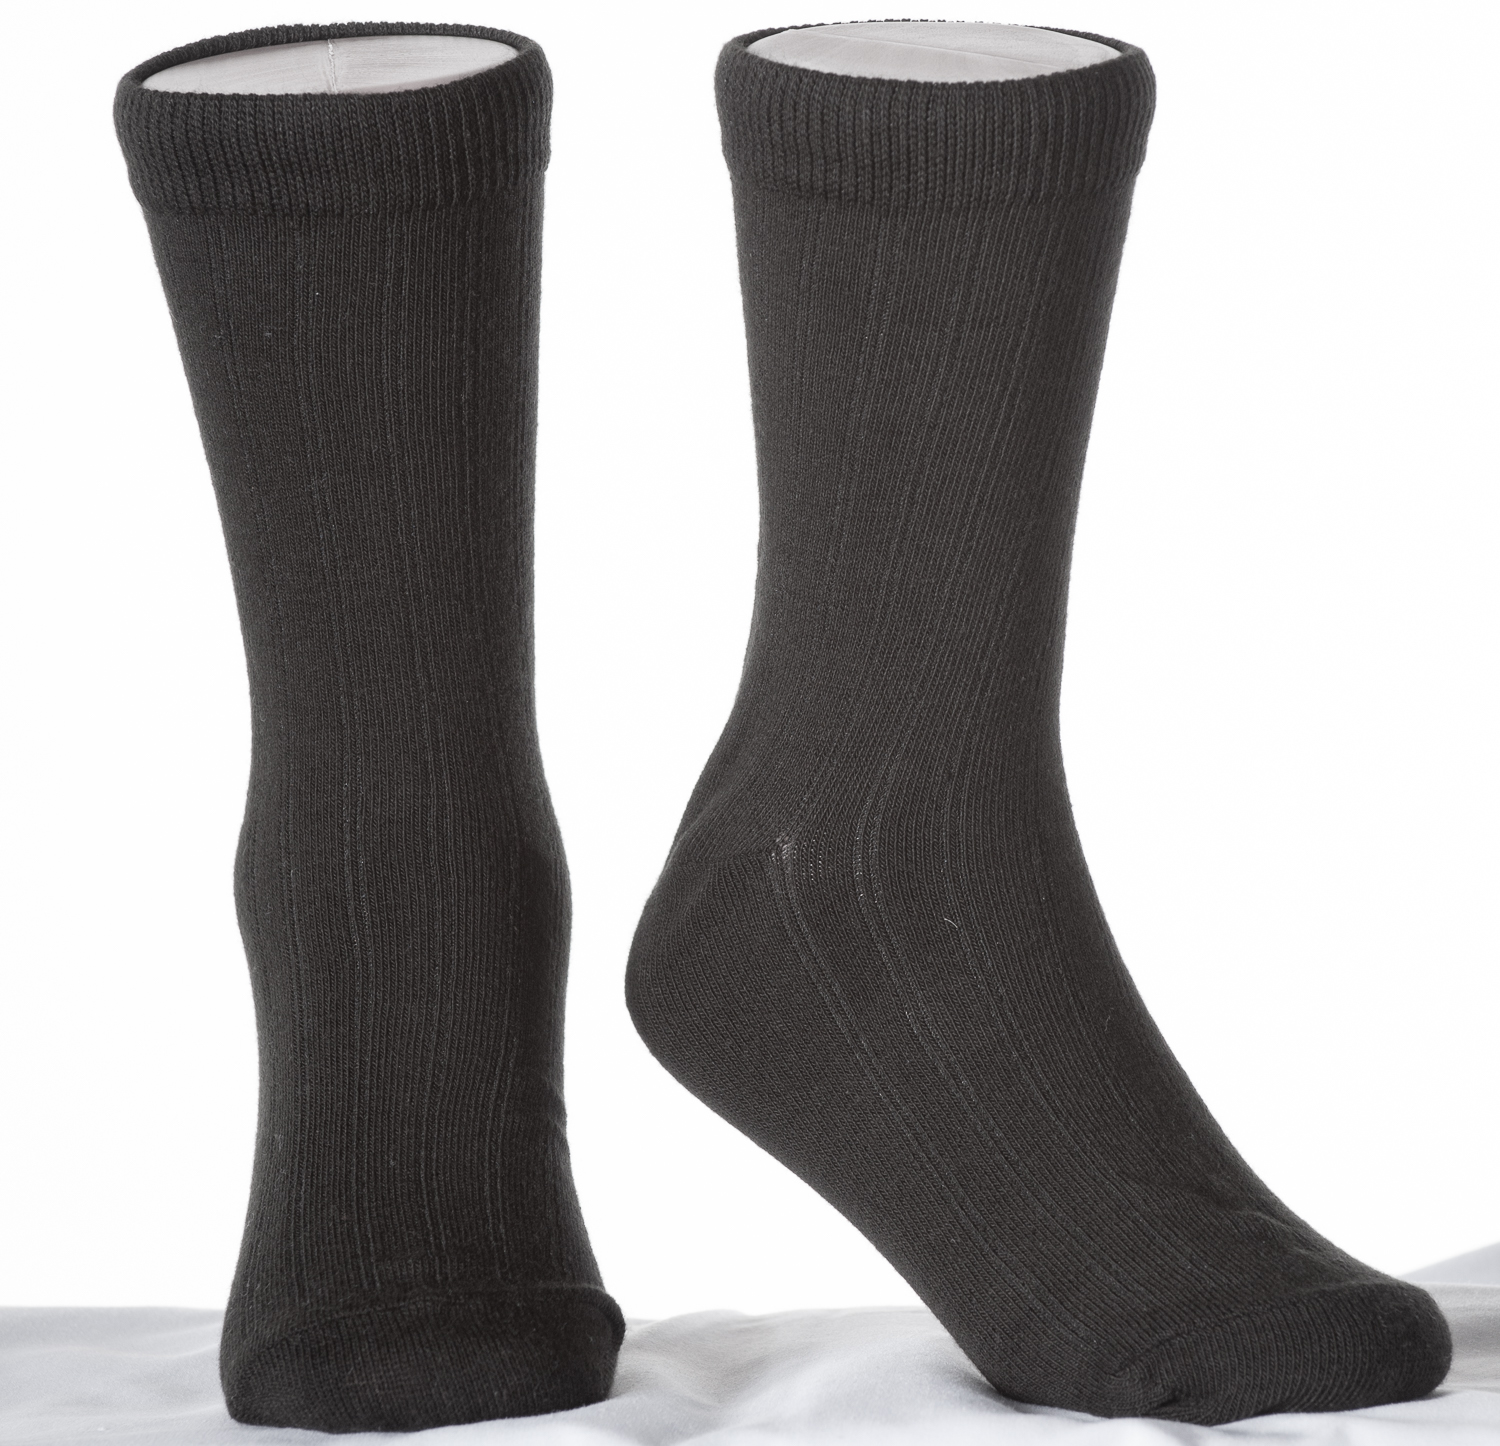 Jefferies Socks Boys Black Dress Socks